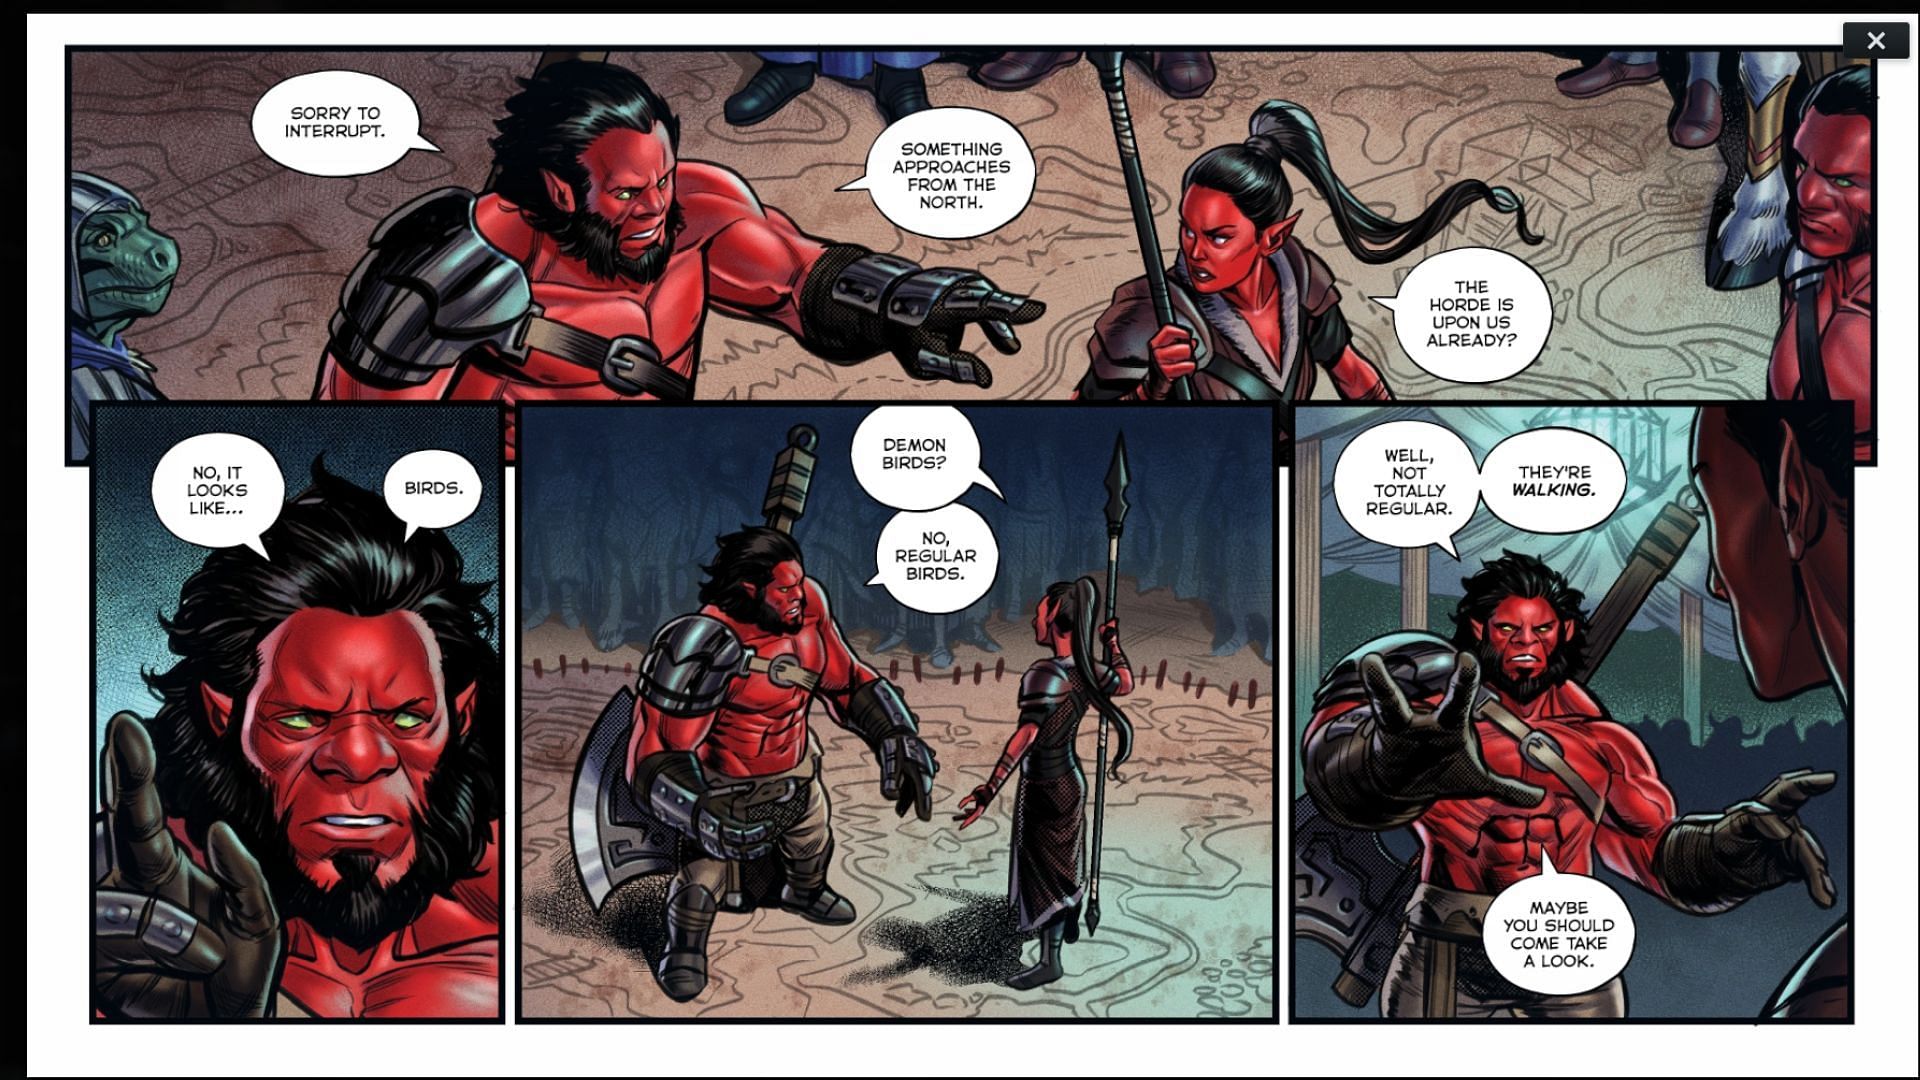 Axe and Sorla Khan discussing battle plans (Image via Valve)